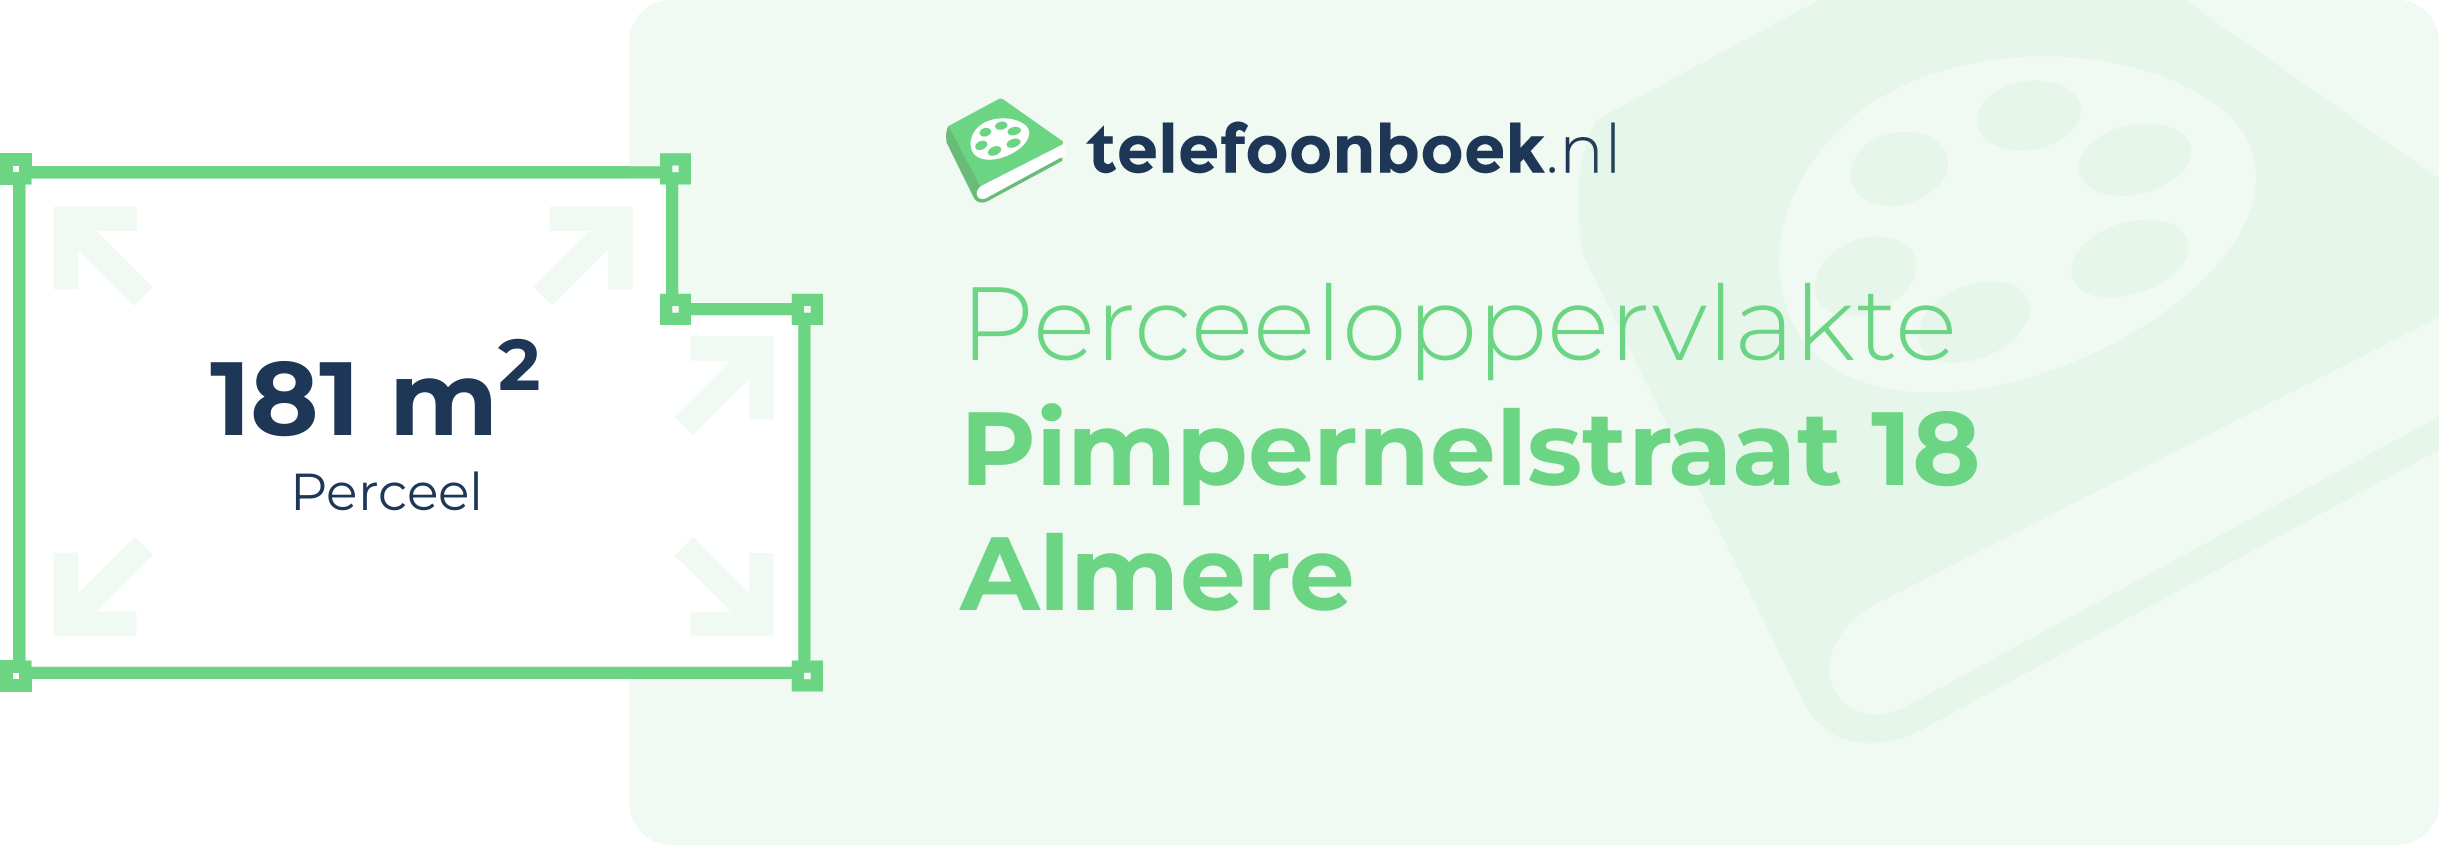 Perceeloppervlakte Pimpernelstraat 18 Almere